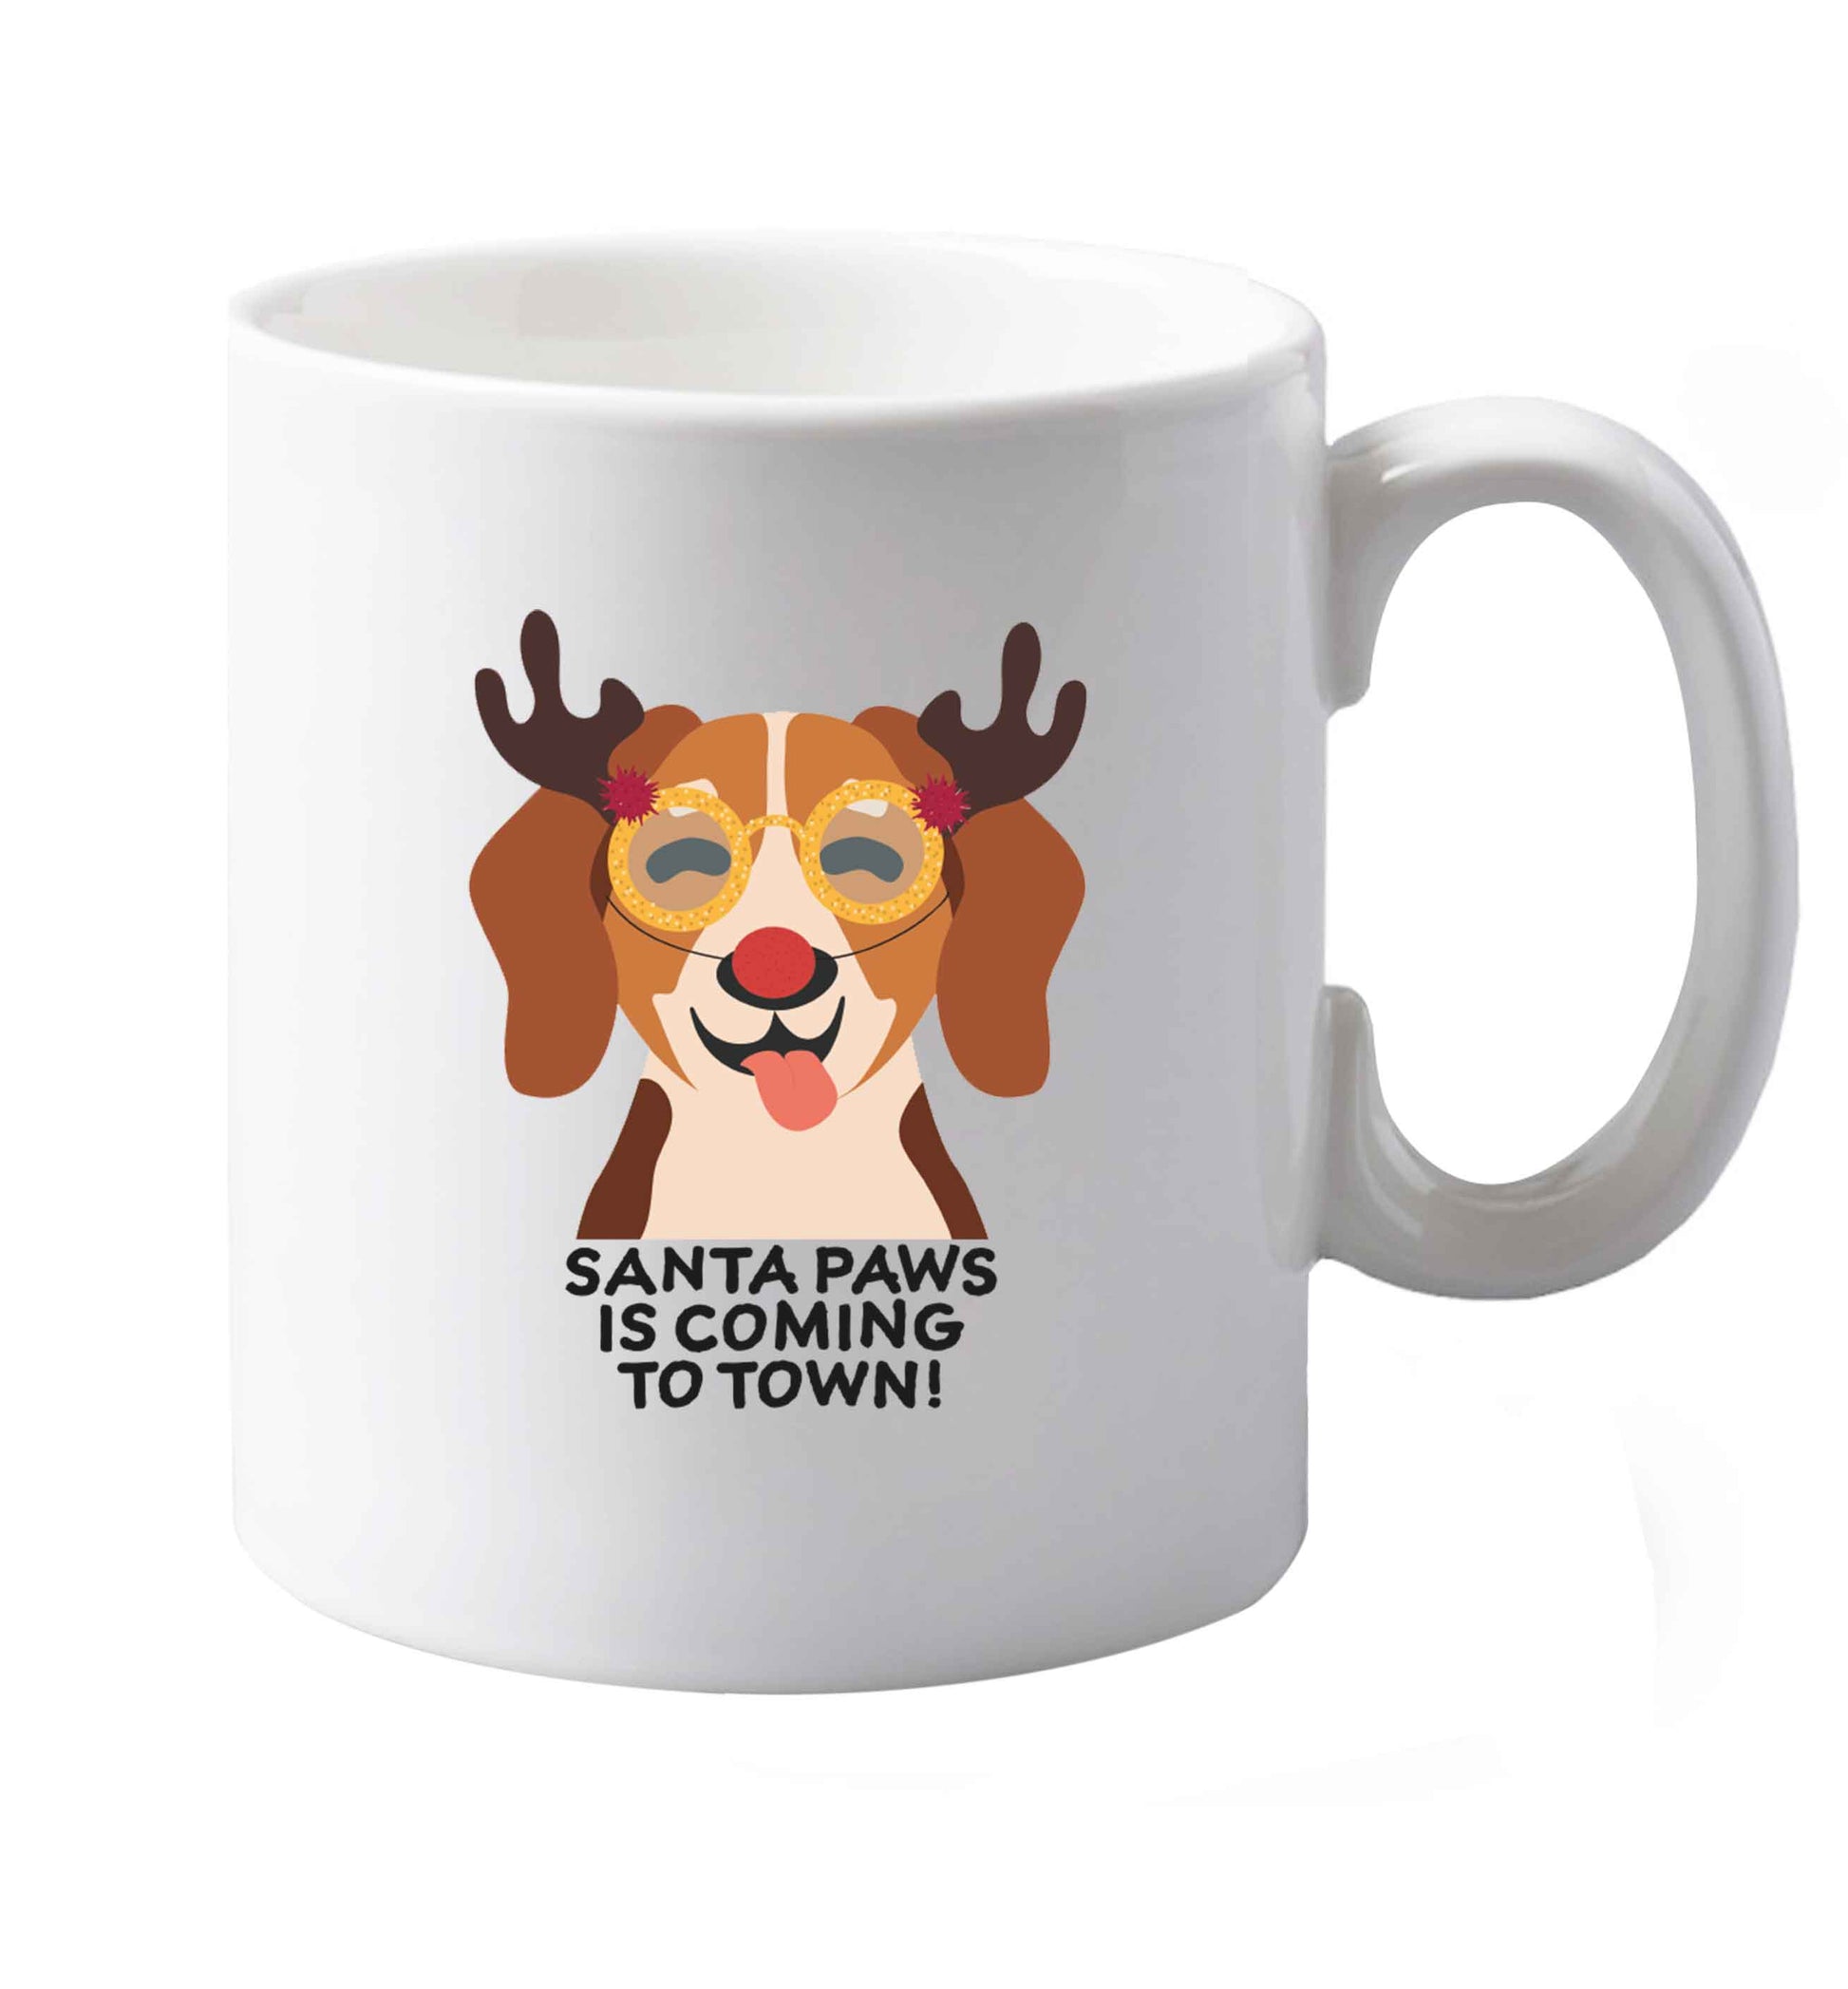 10 oz Santa paws is coming to town ceramic mug both sides